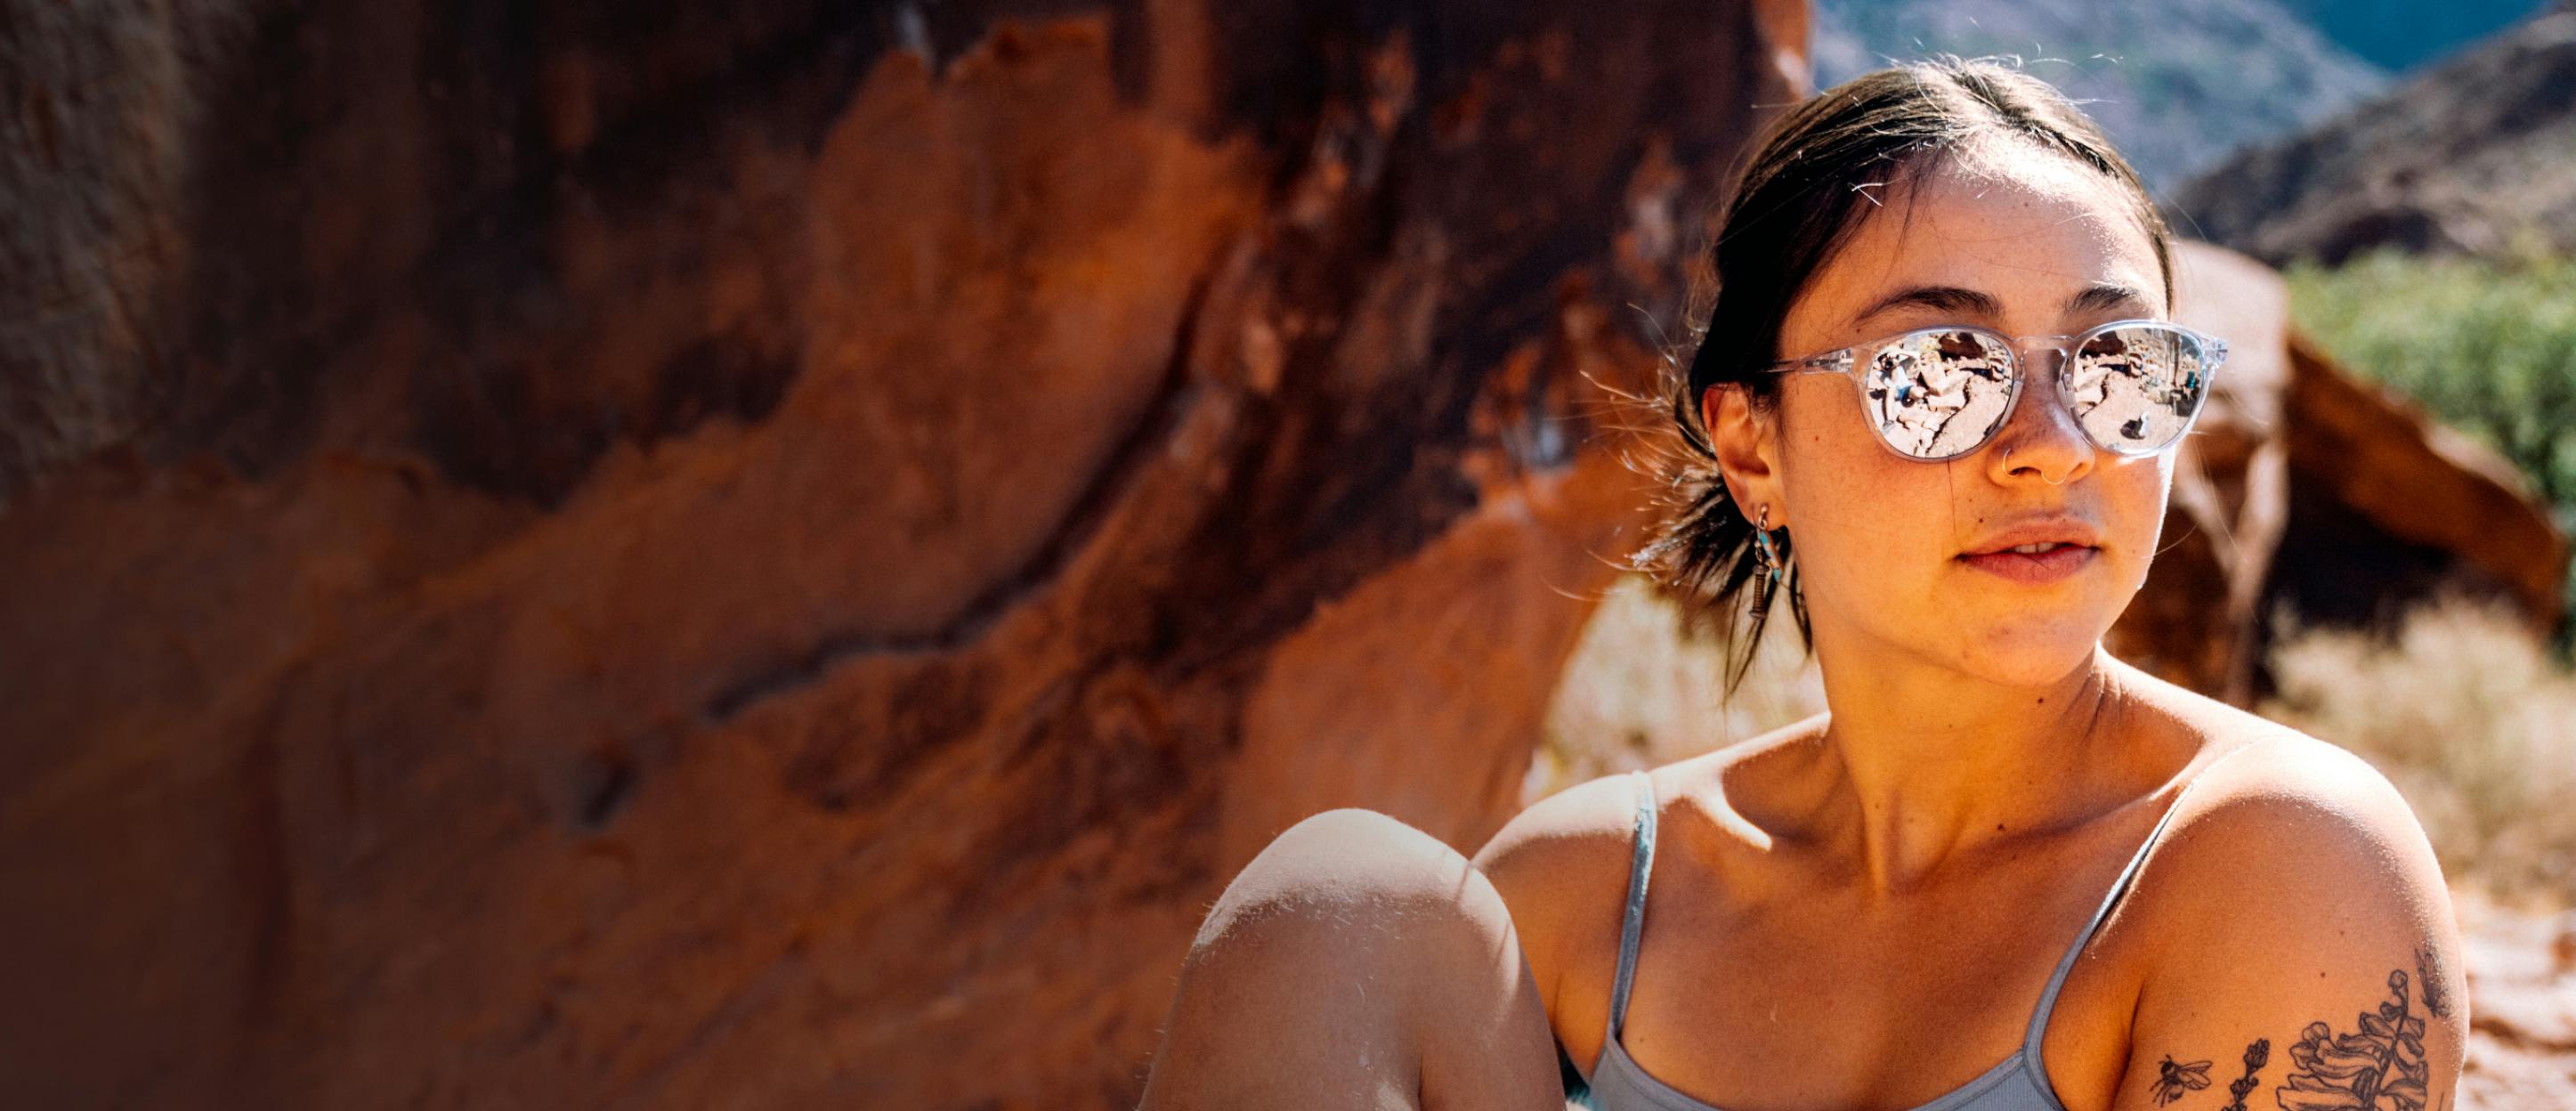 Woman rock climbing wearing ROKA sunglasses